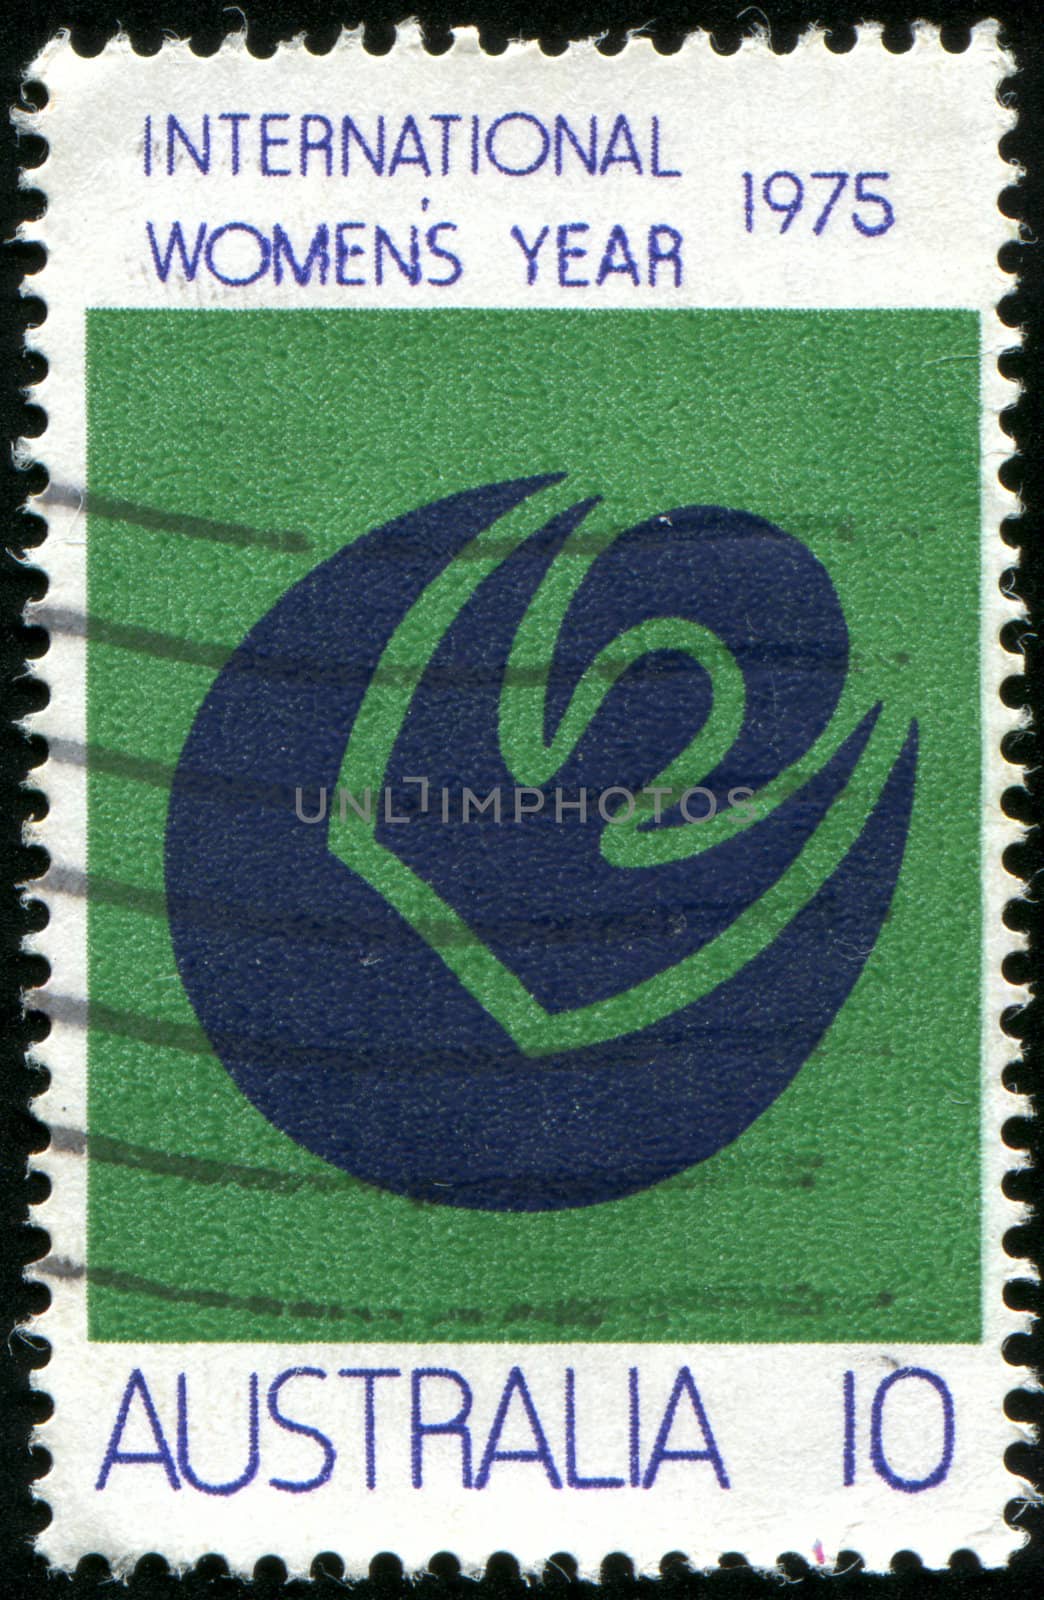 AUSTRALIA - CIRCA 1975: stamp printed by Australia, shows Symbols of Womanhood Sun, Moon, circa 1975